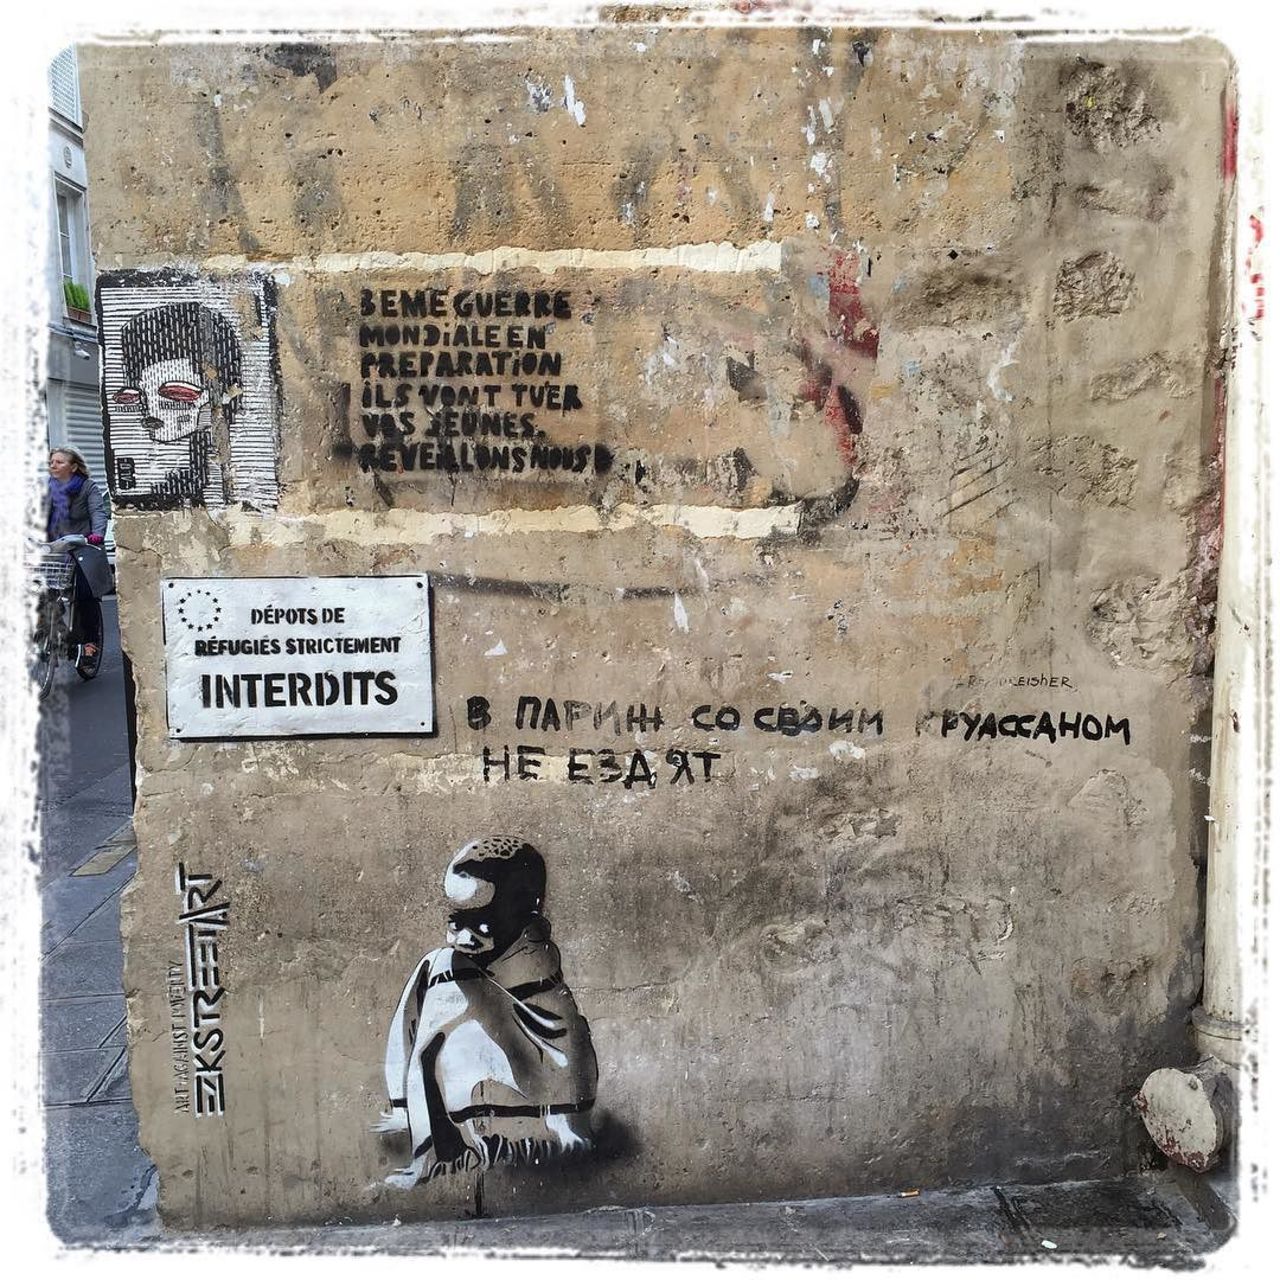 #Paris #graffiti photo by @gabyinparis http://ift.tt/1LQBEle #StreetArt https://t.co/S02hUxWGBb